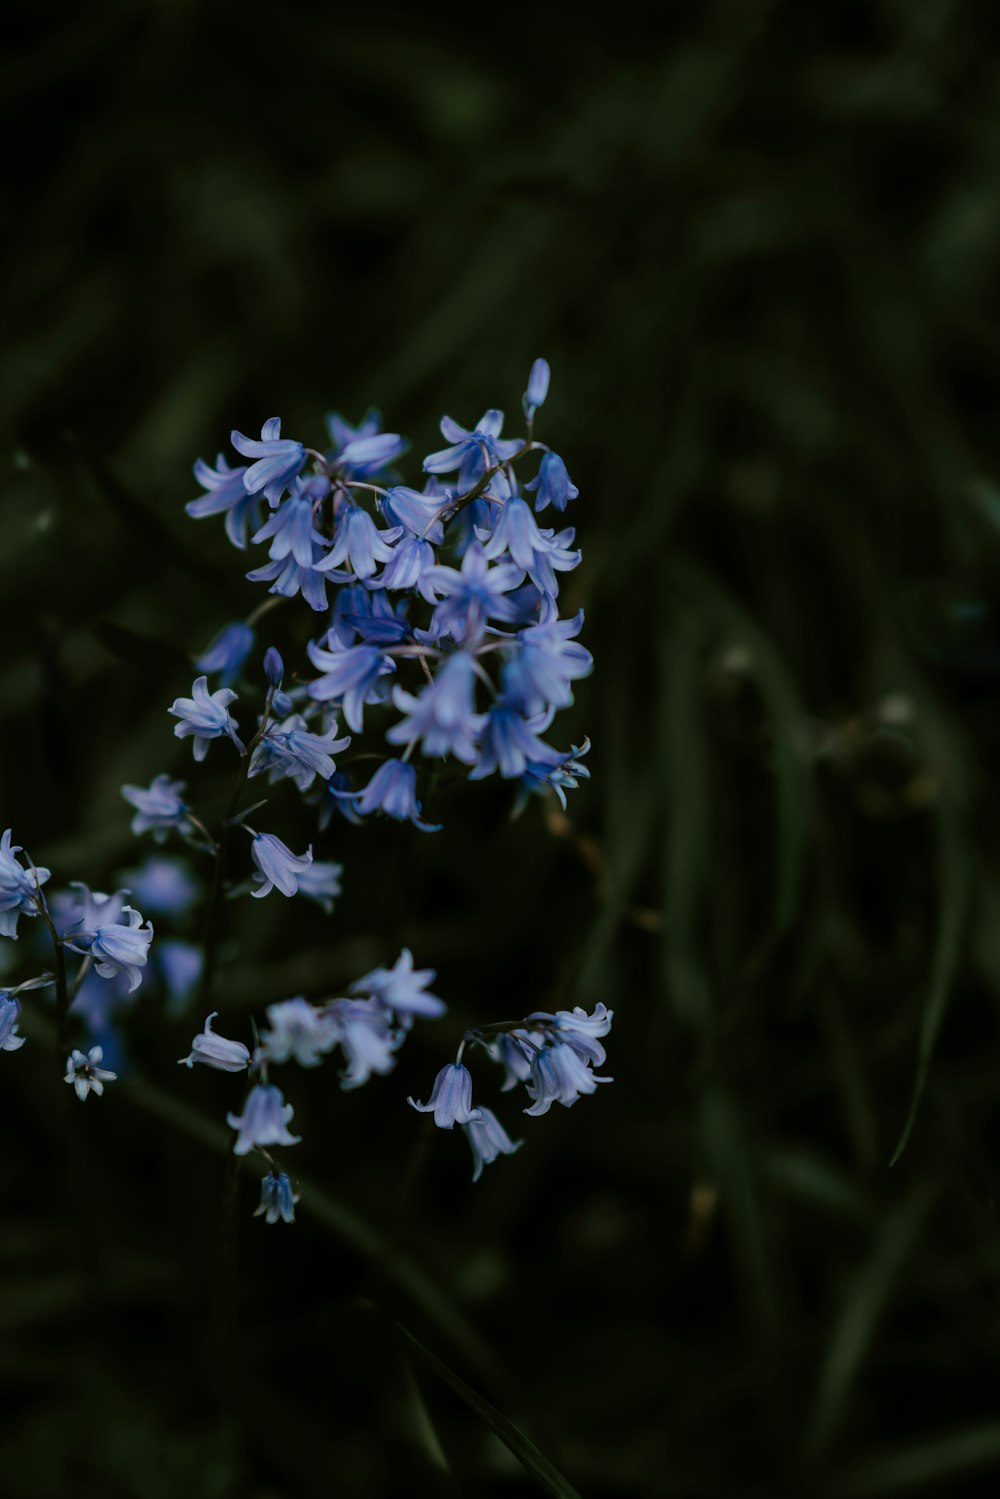 Fotografia a fuoco superficiale di fiori di petali blu